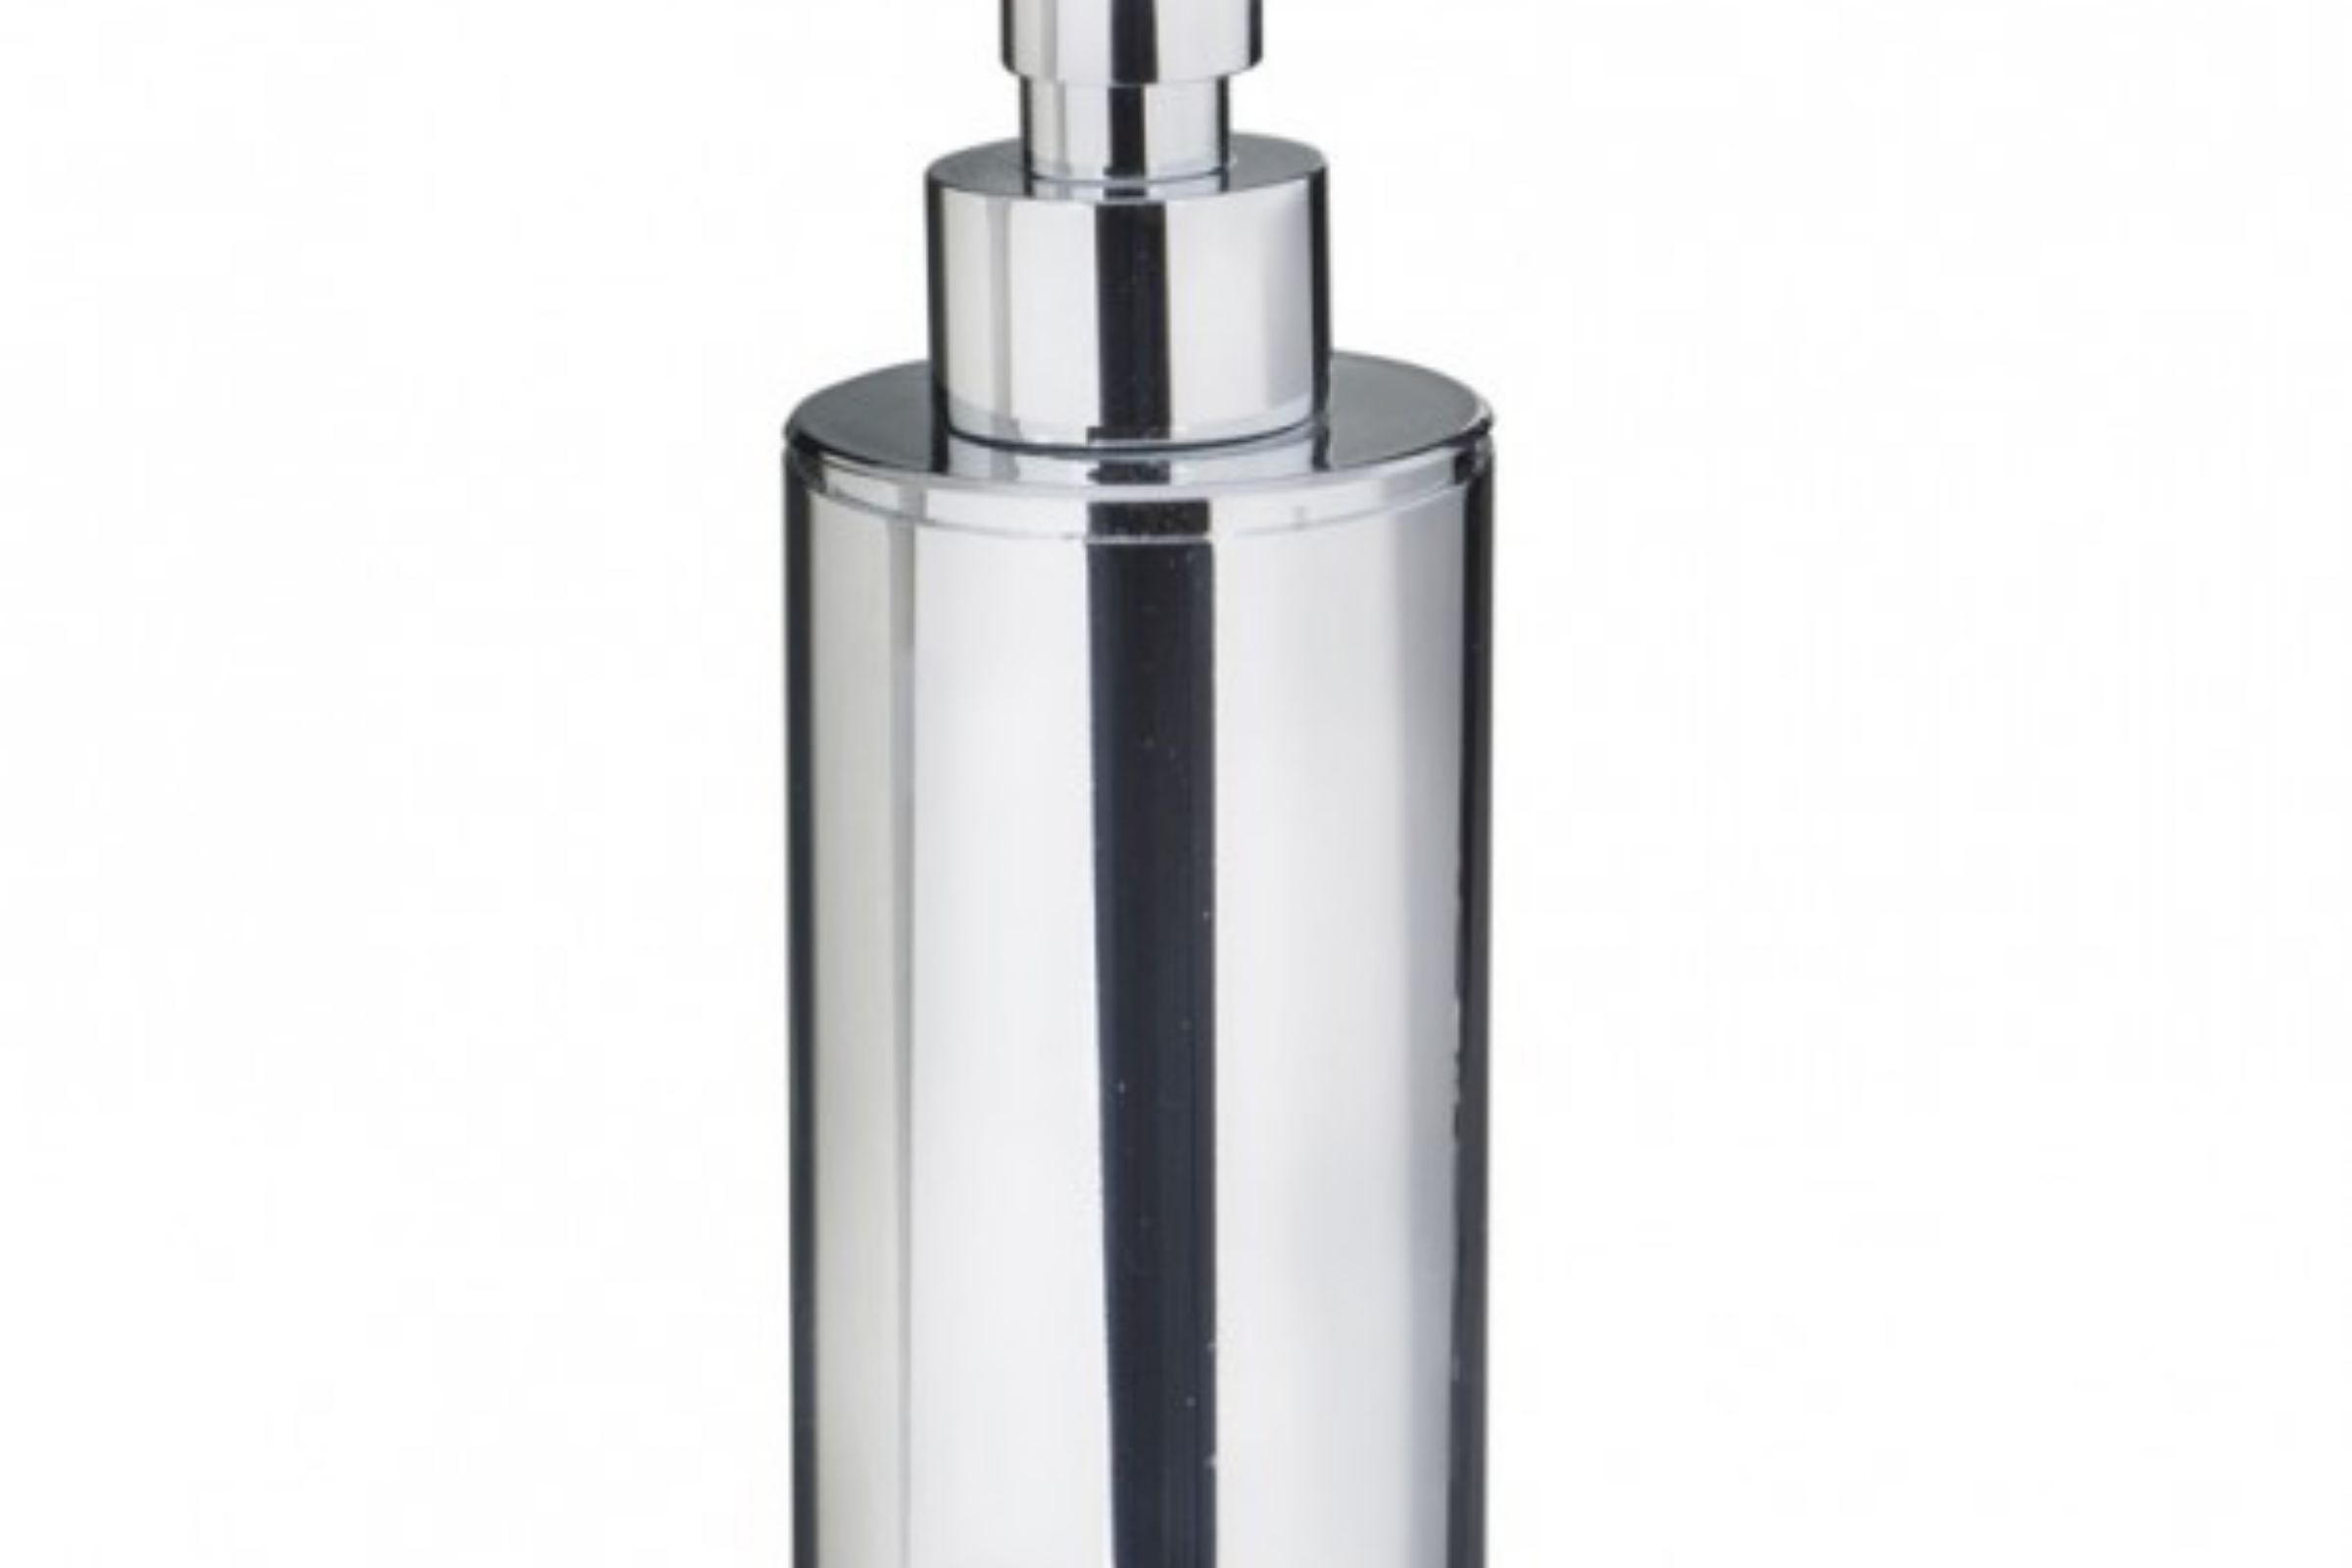 dosatore metallo tondo appoggio rest standing round liquid soap dispenser in metal Ø cm. 6x H. cm. 20